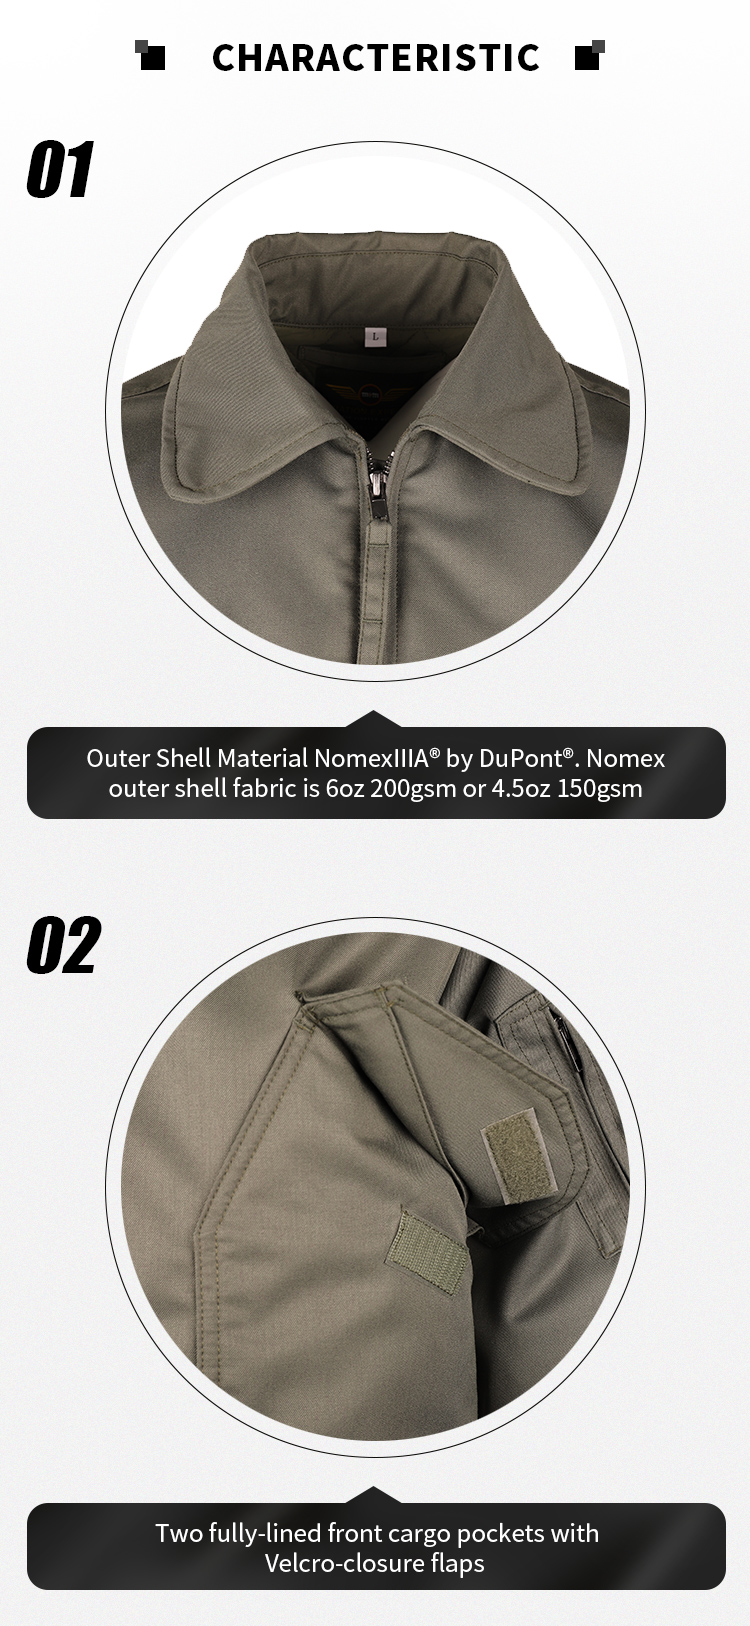 Nomex CWU45/P Flight jacket